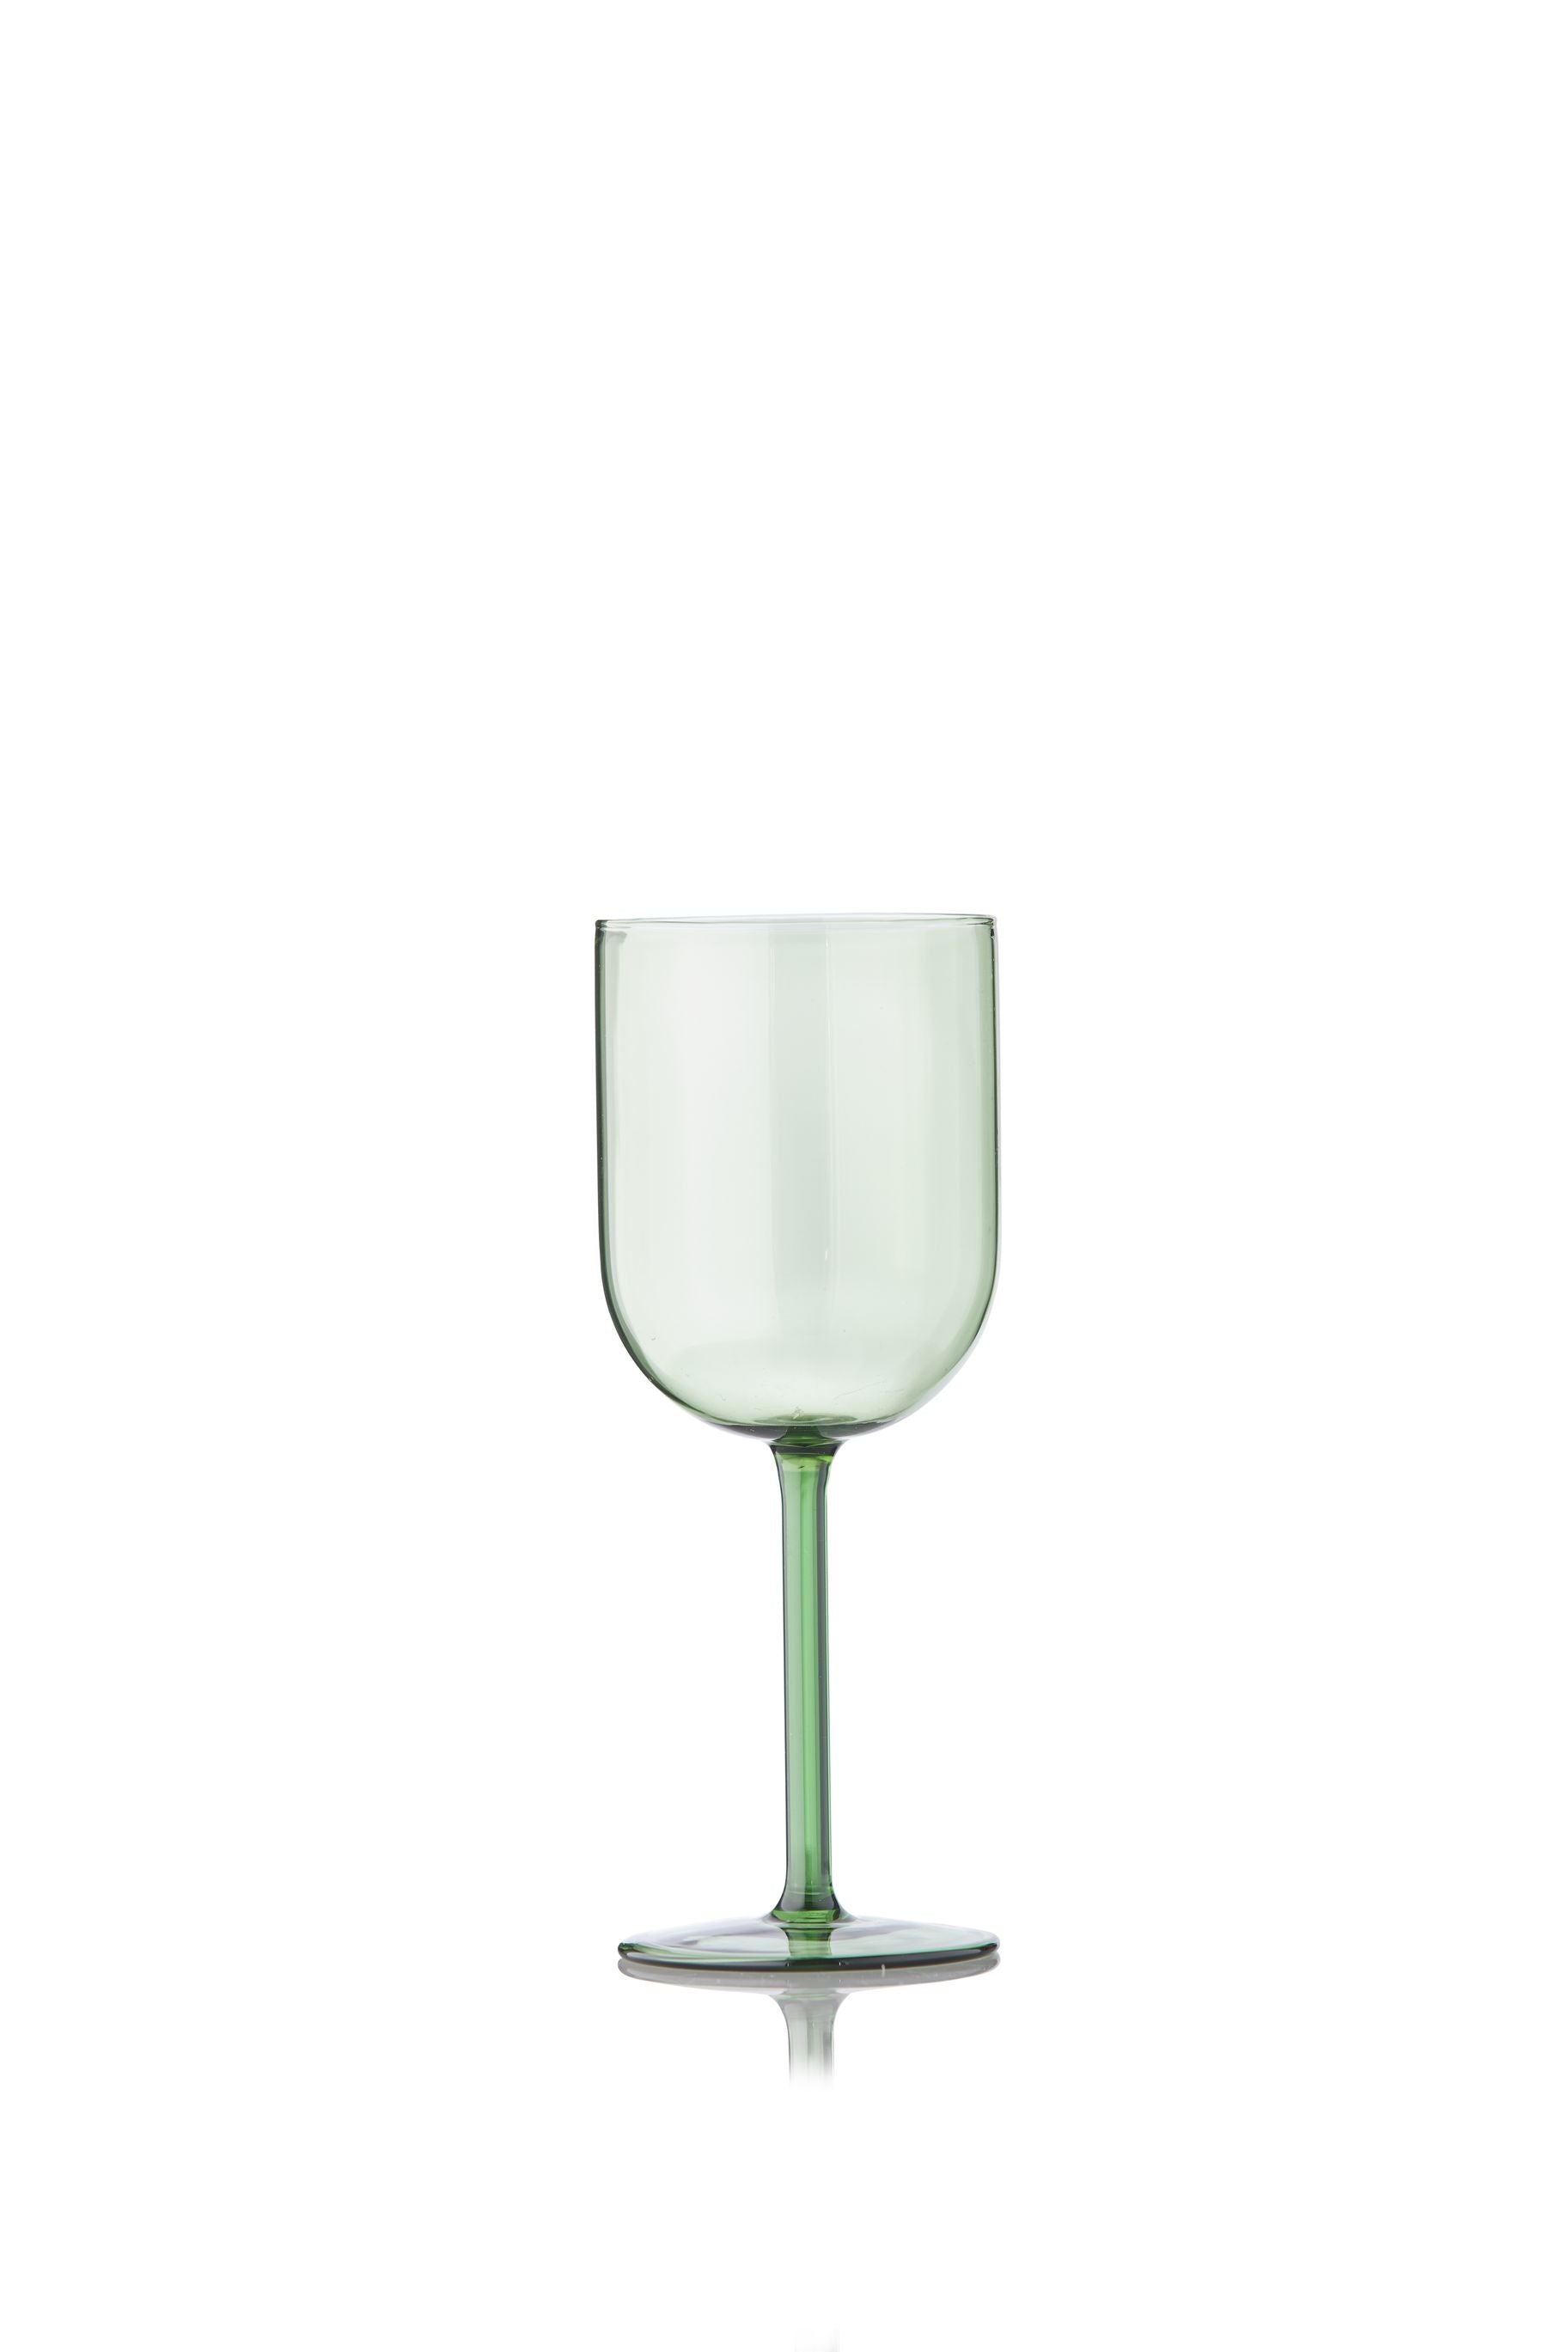 Studio About Glassware Set Of 2 Wine Glasses, Green